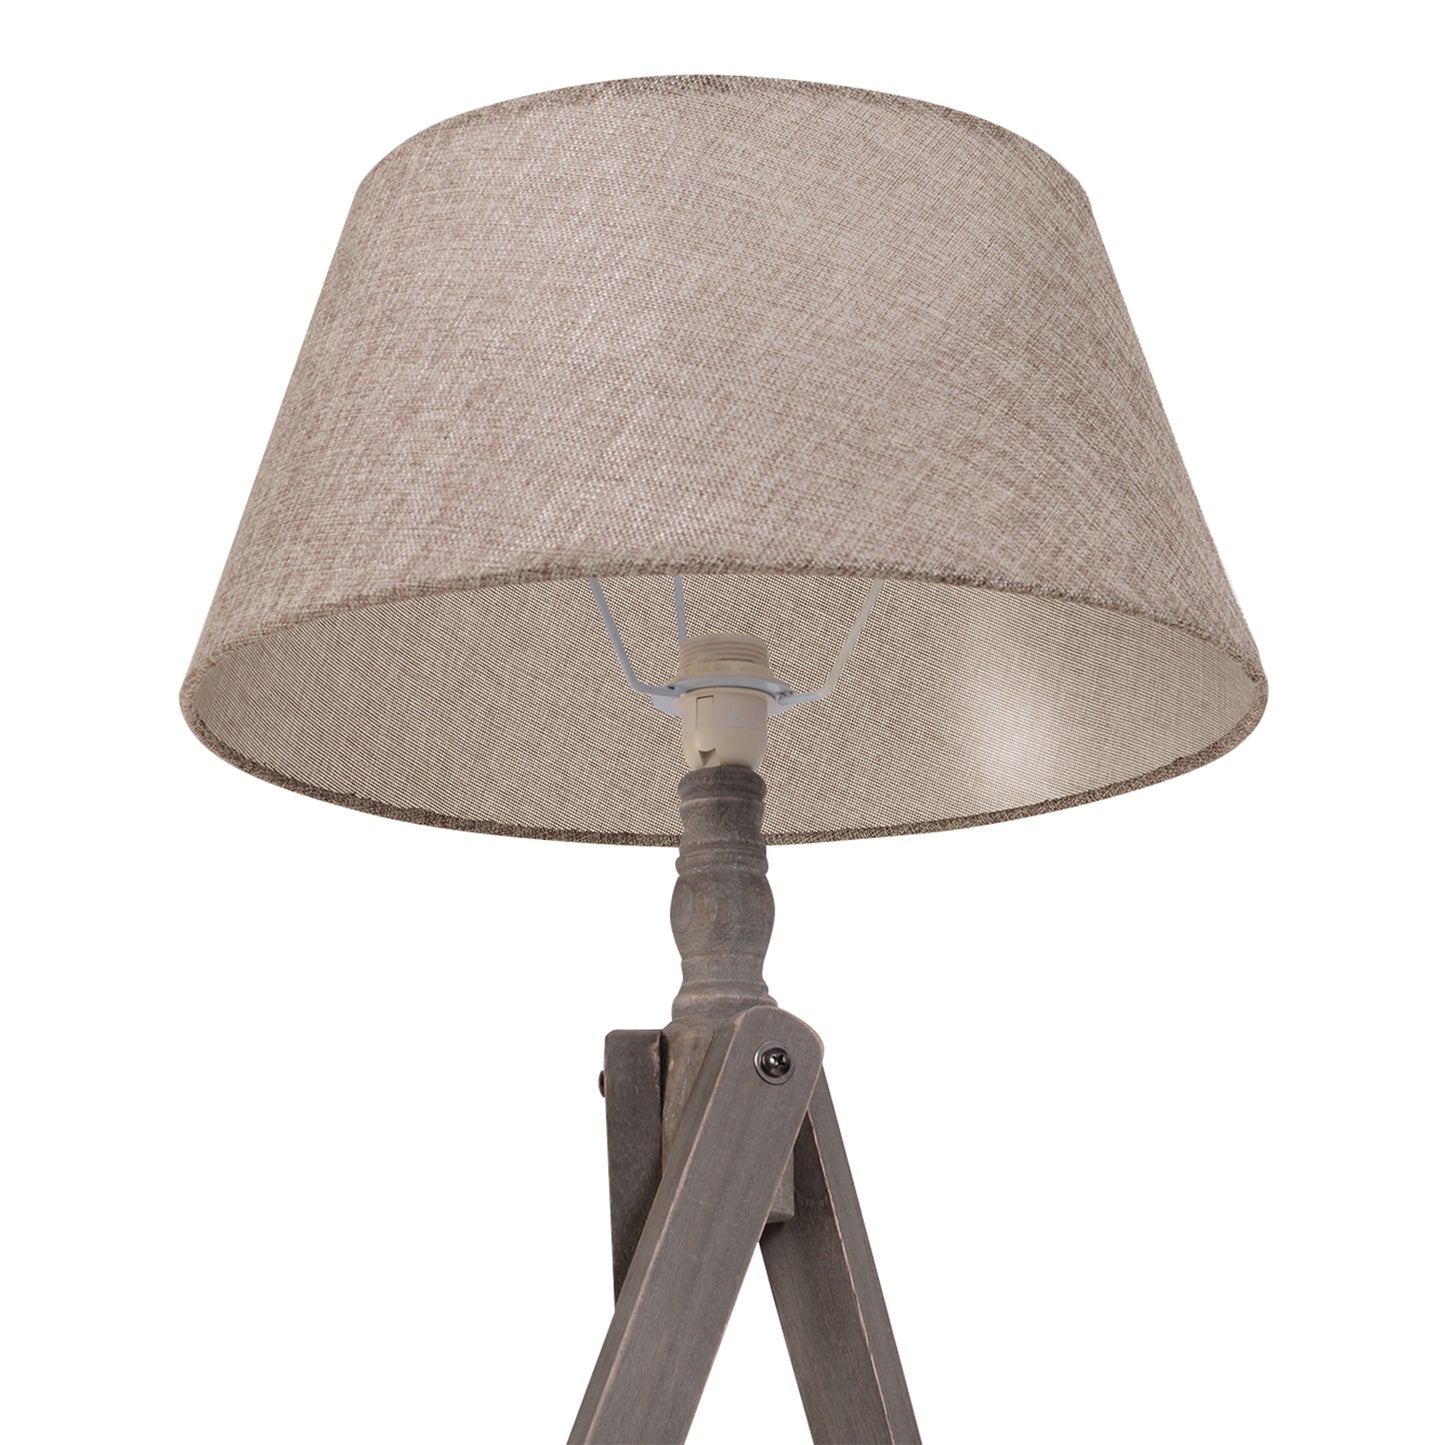 HOMCOM Free Standing Floor Lamp, 54Lx54Wx146H cm-Beige/Grey